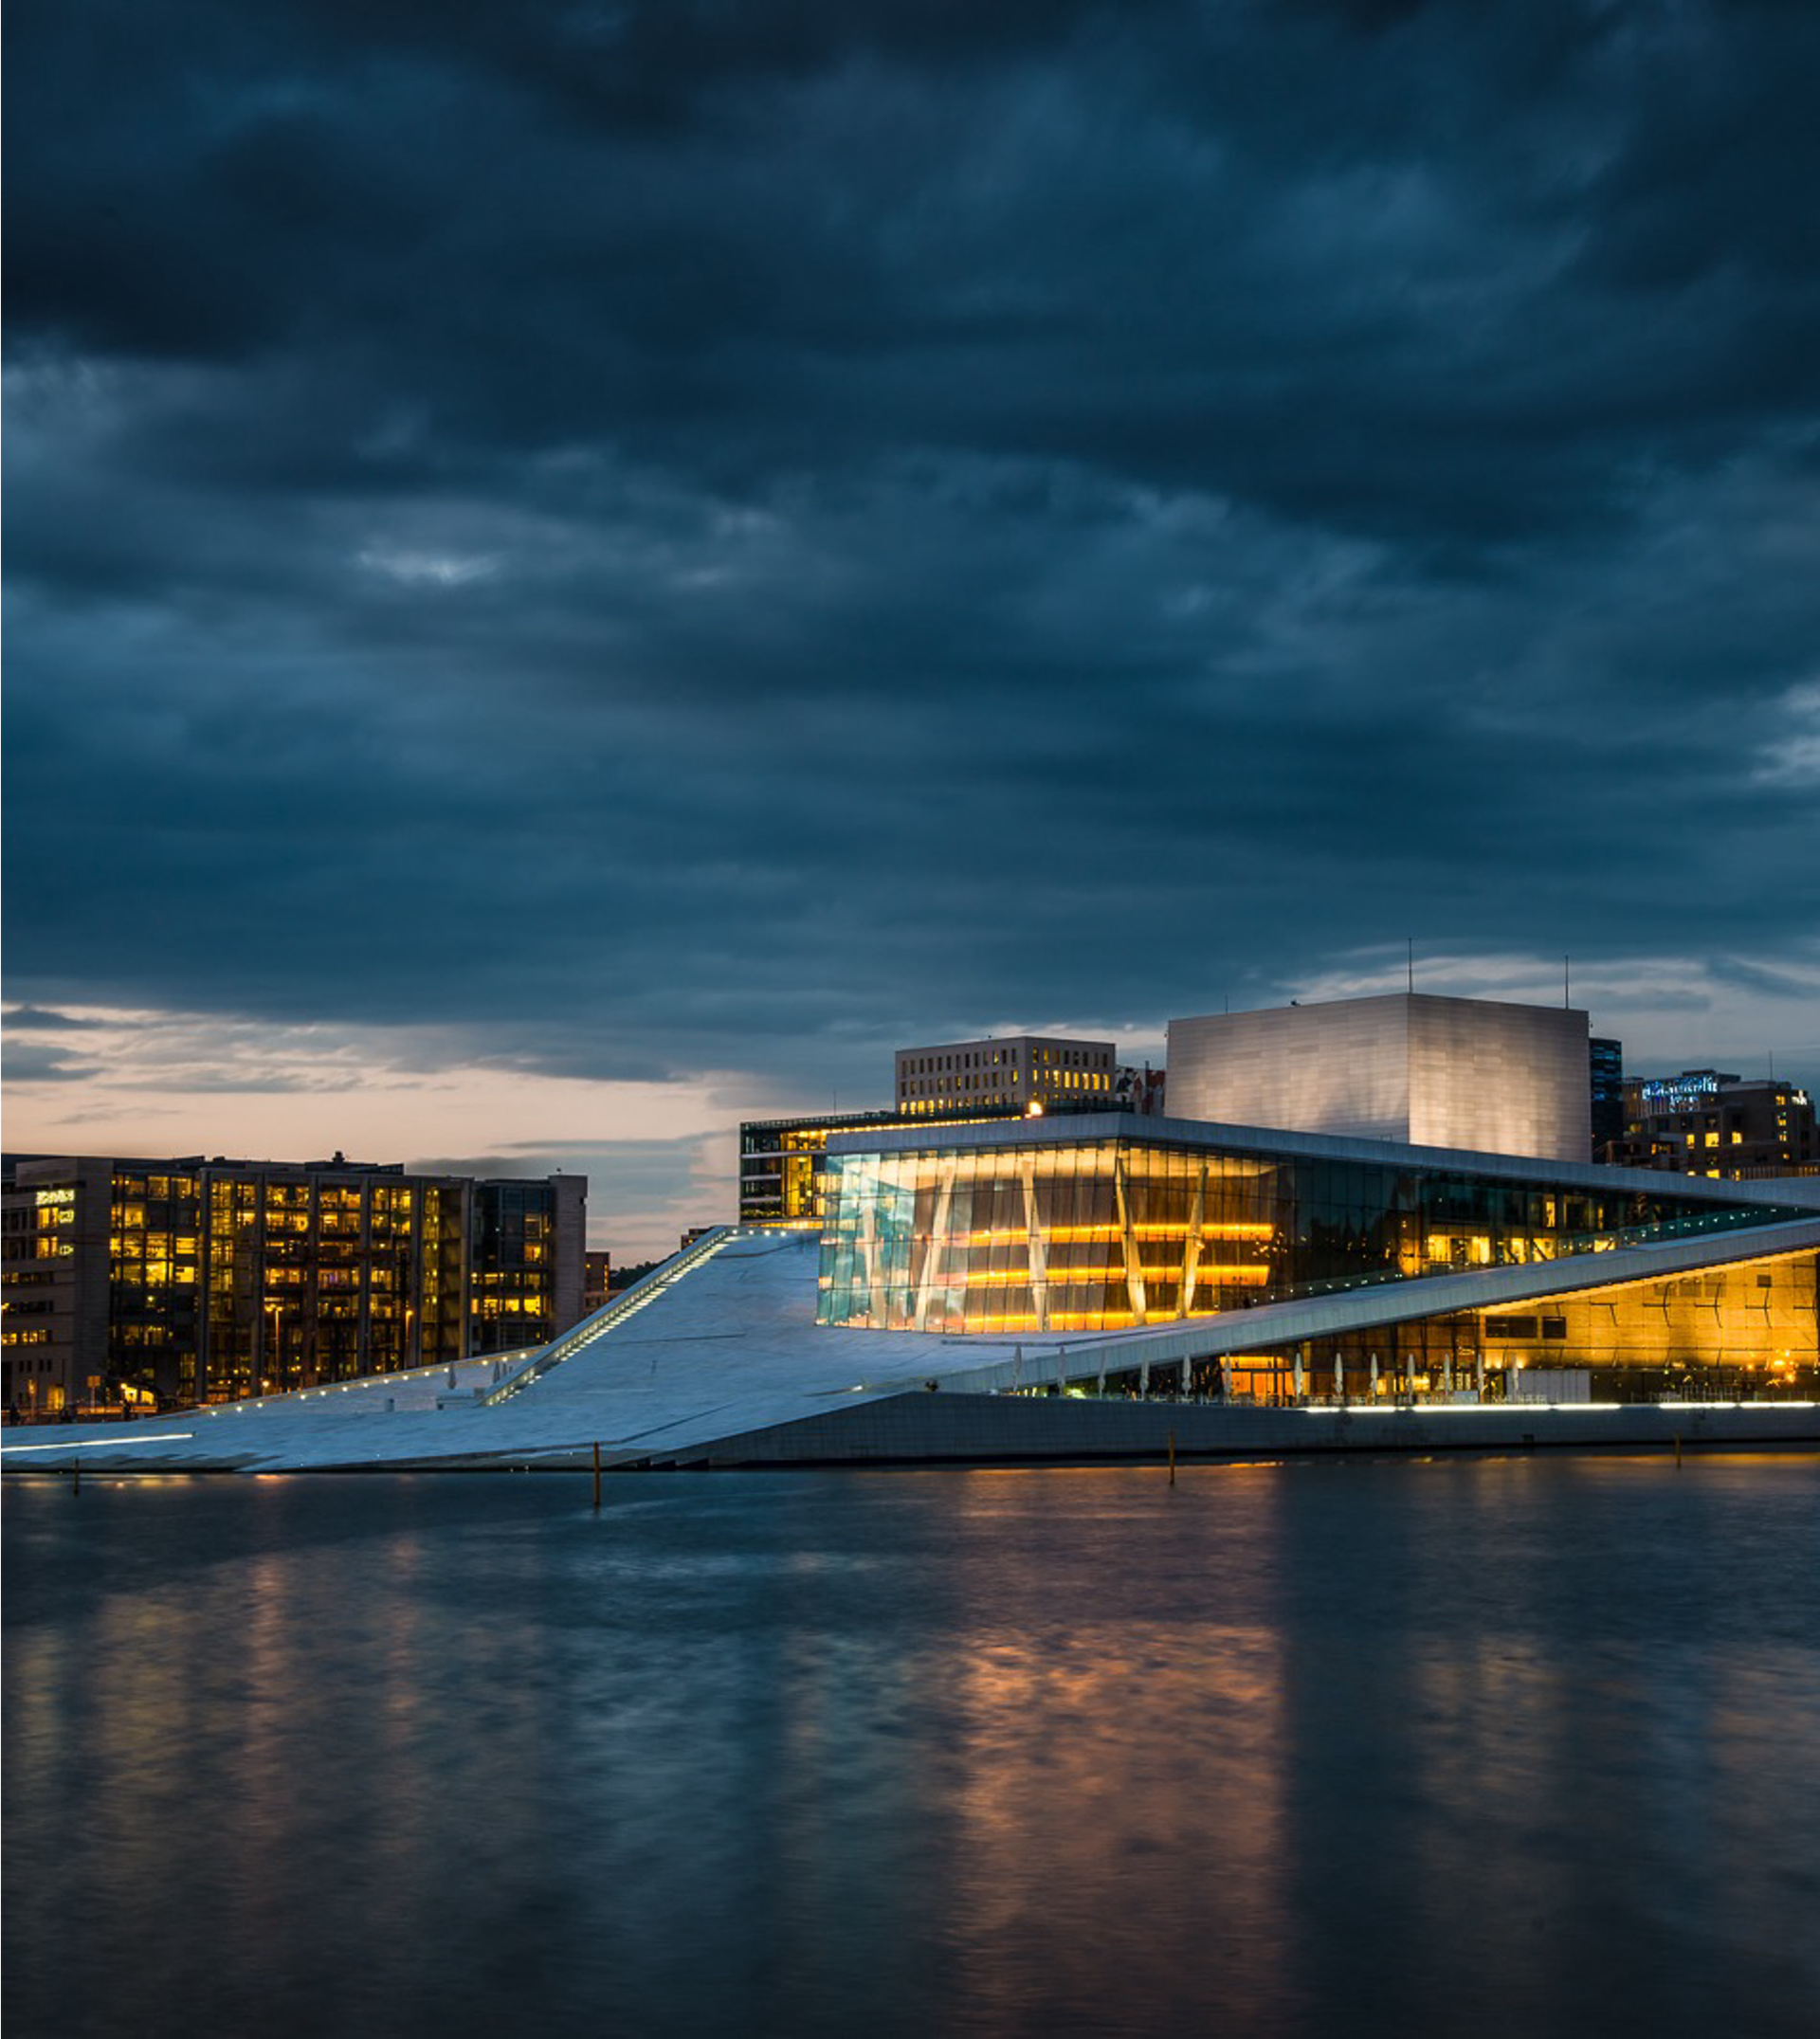 The Oslo Opera House lit up at night.